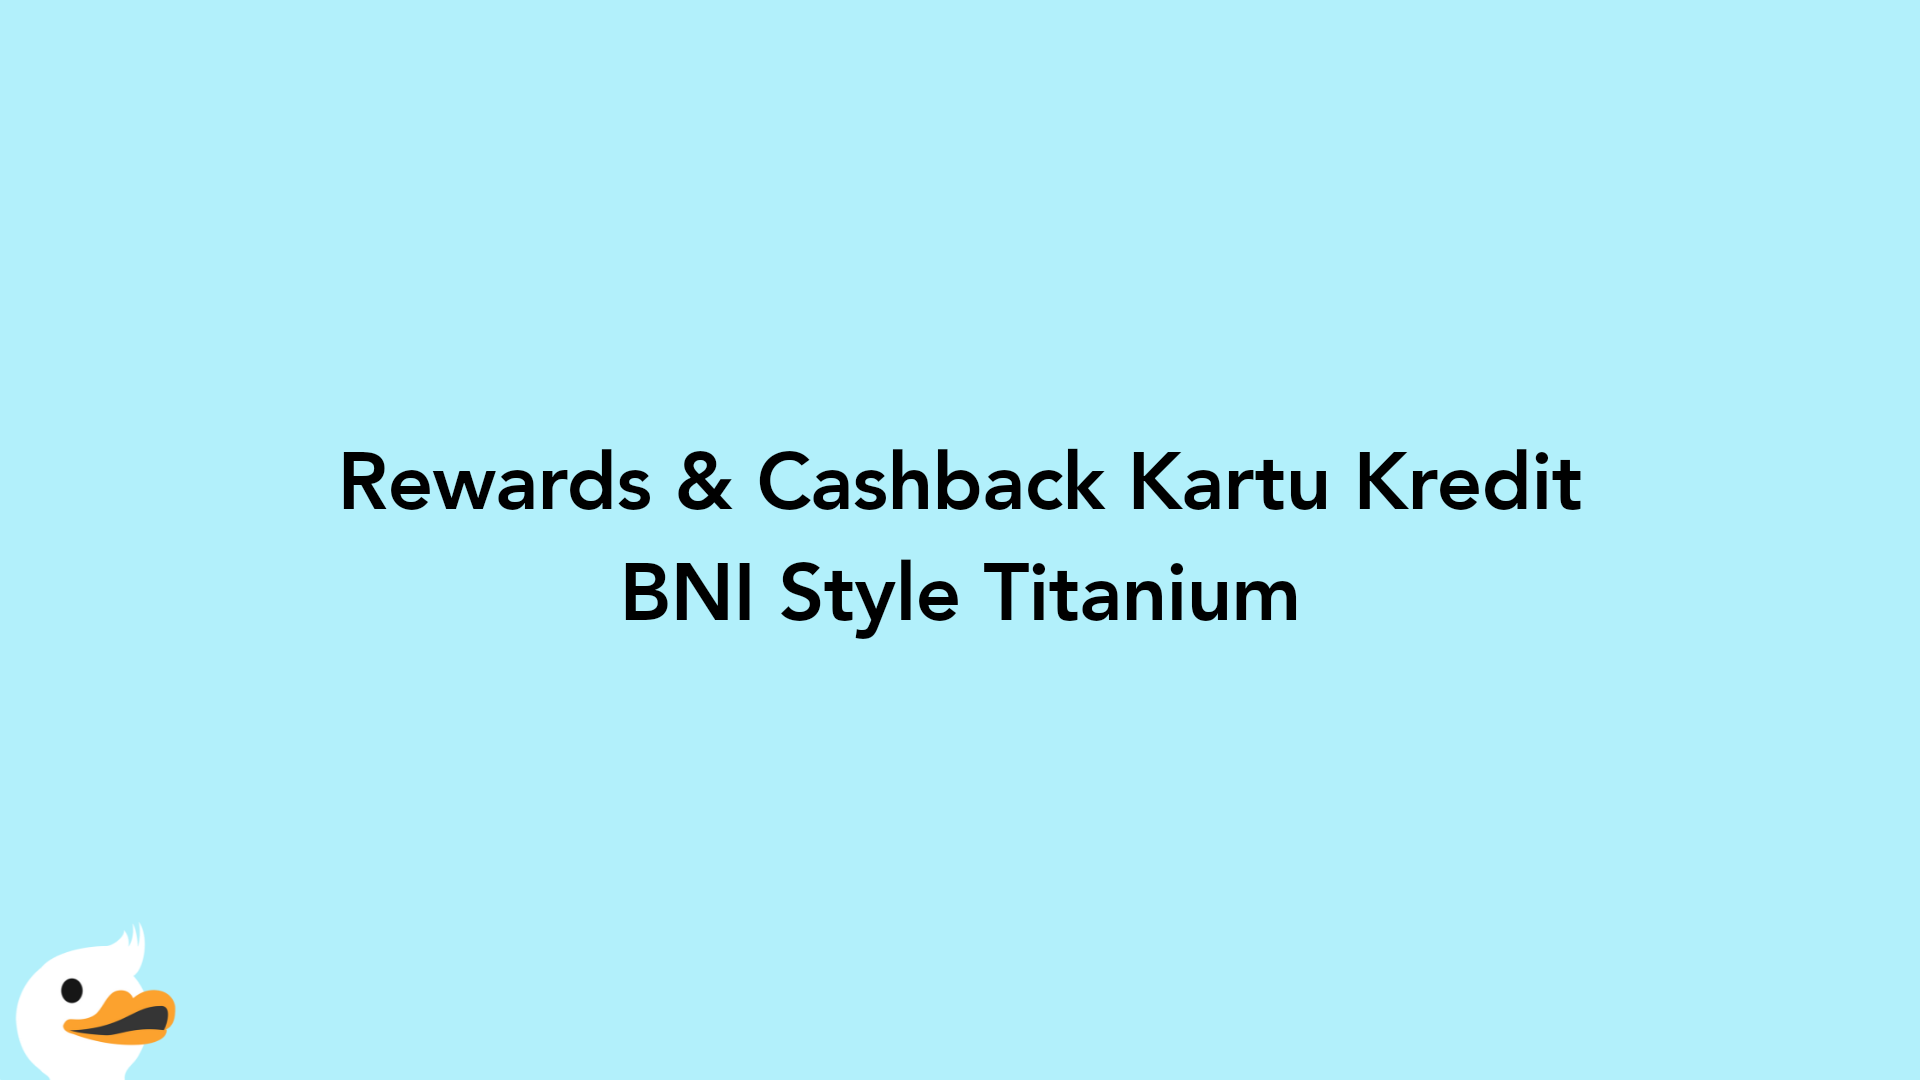 Rewards & Cashback Kartu Kredit BNI Style Titanium